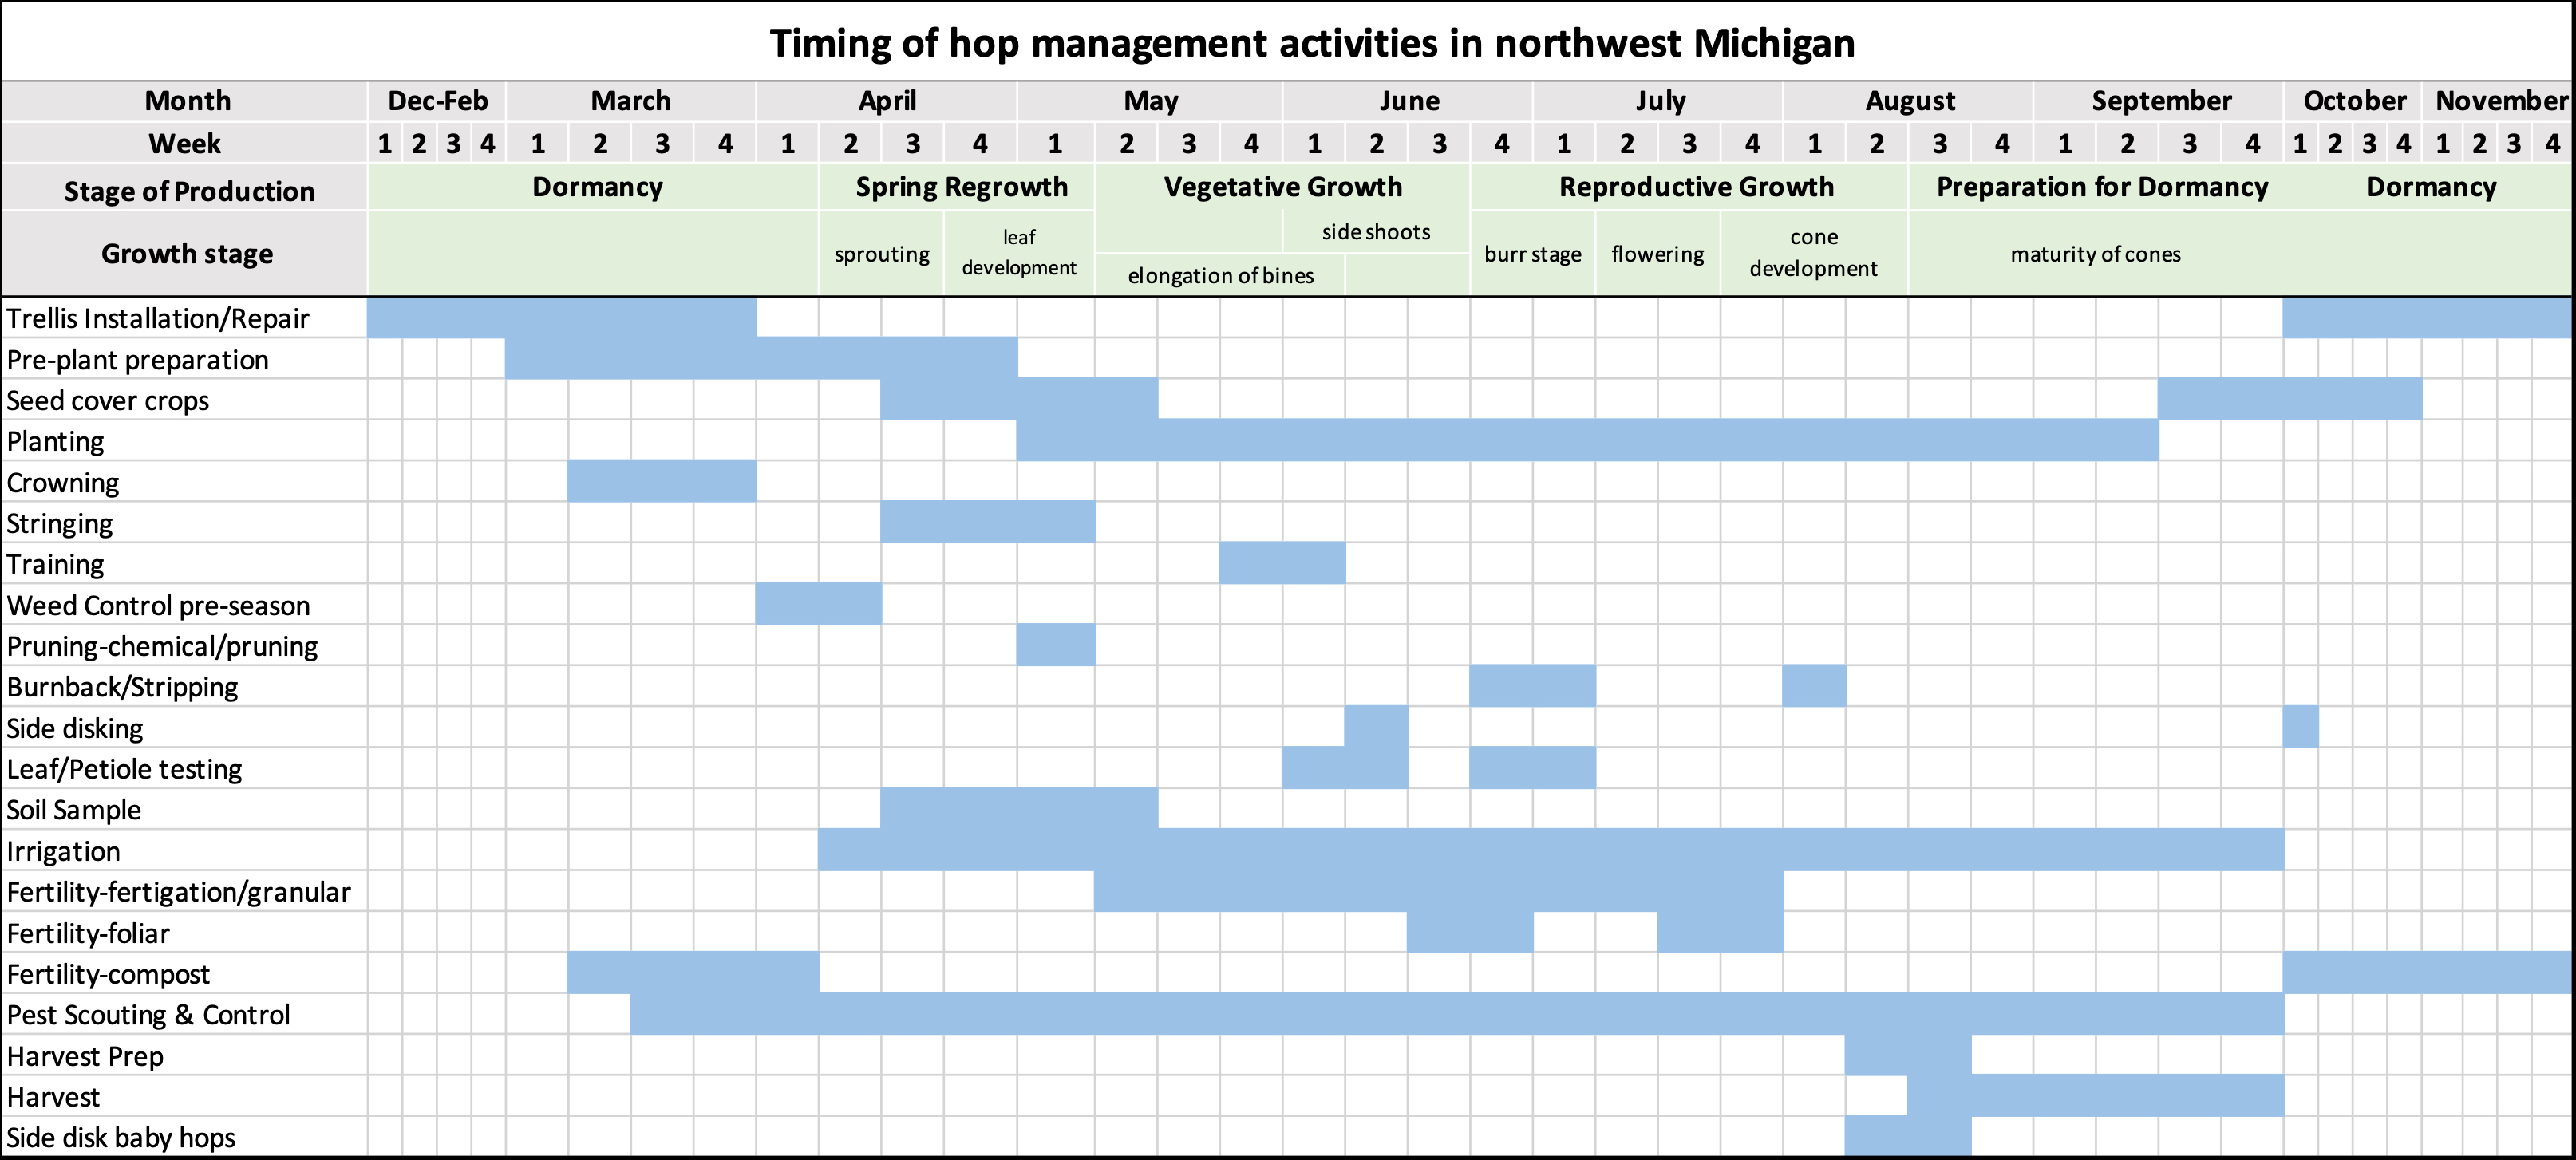 Timing of hop management activities in northwest Michigan.